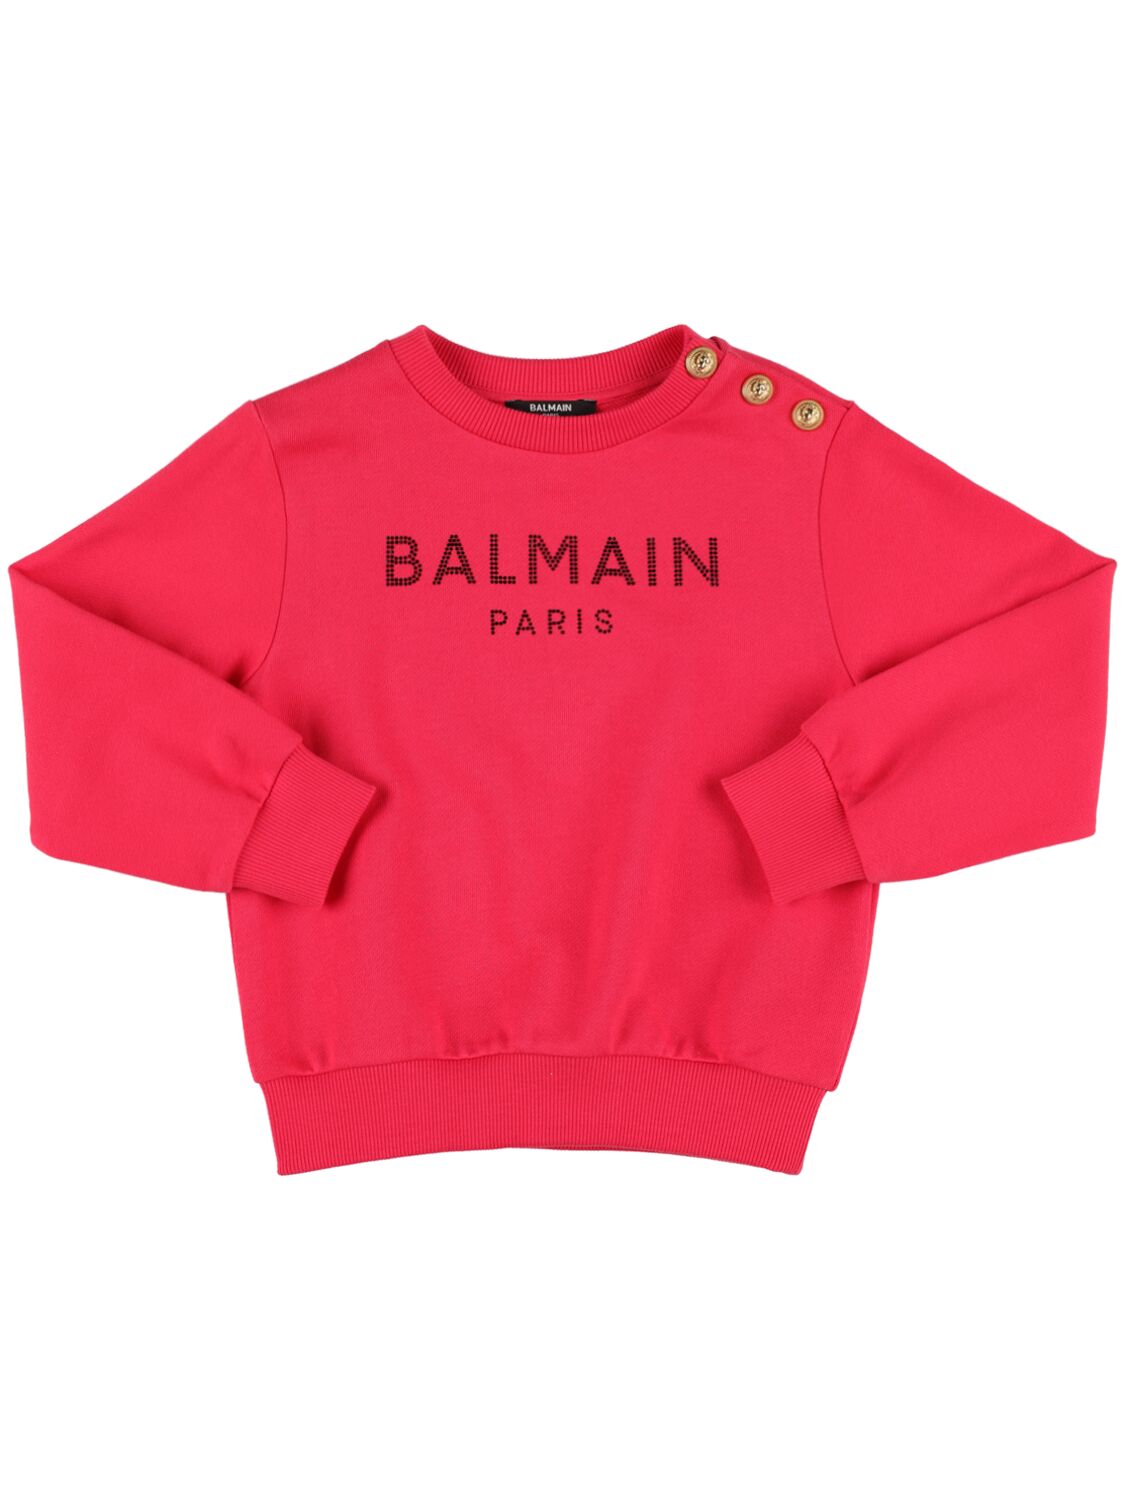 Balmain Kids' Organic Cotton Sweatshirt In Red